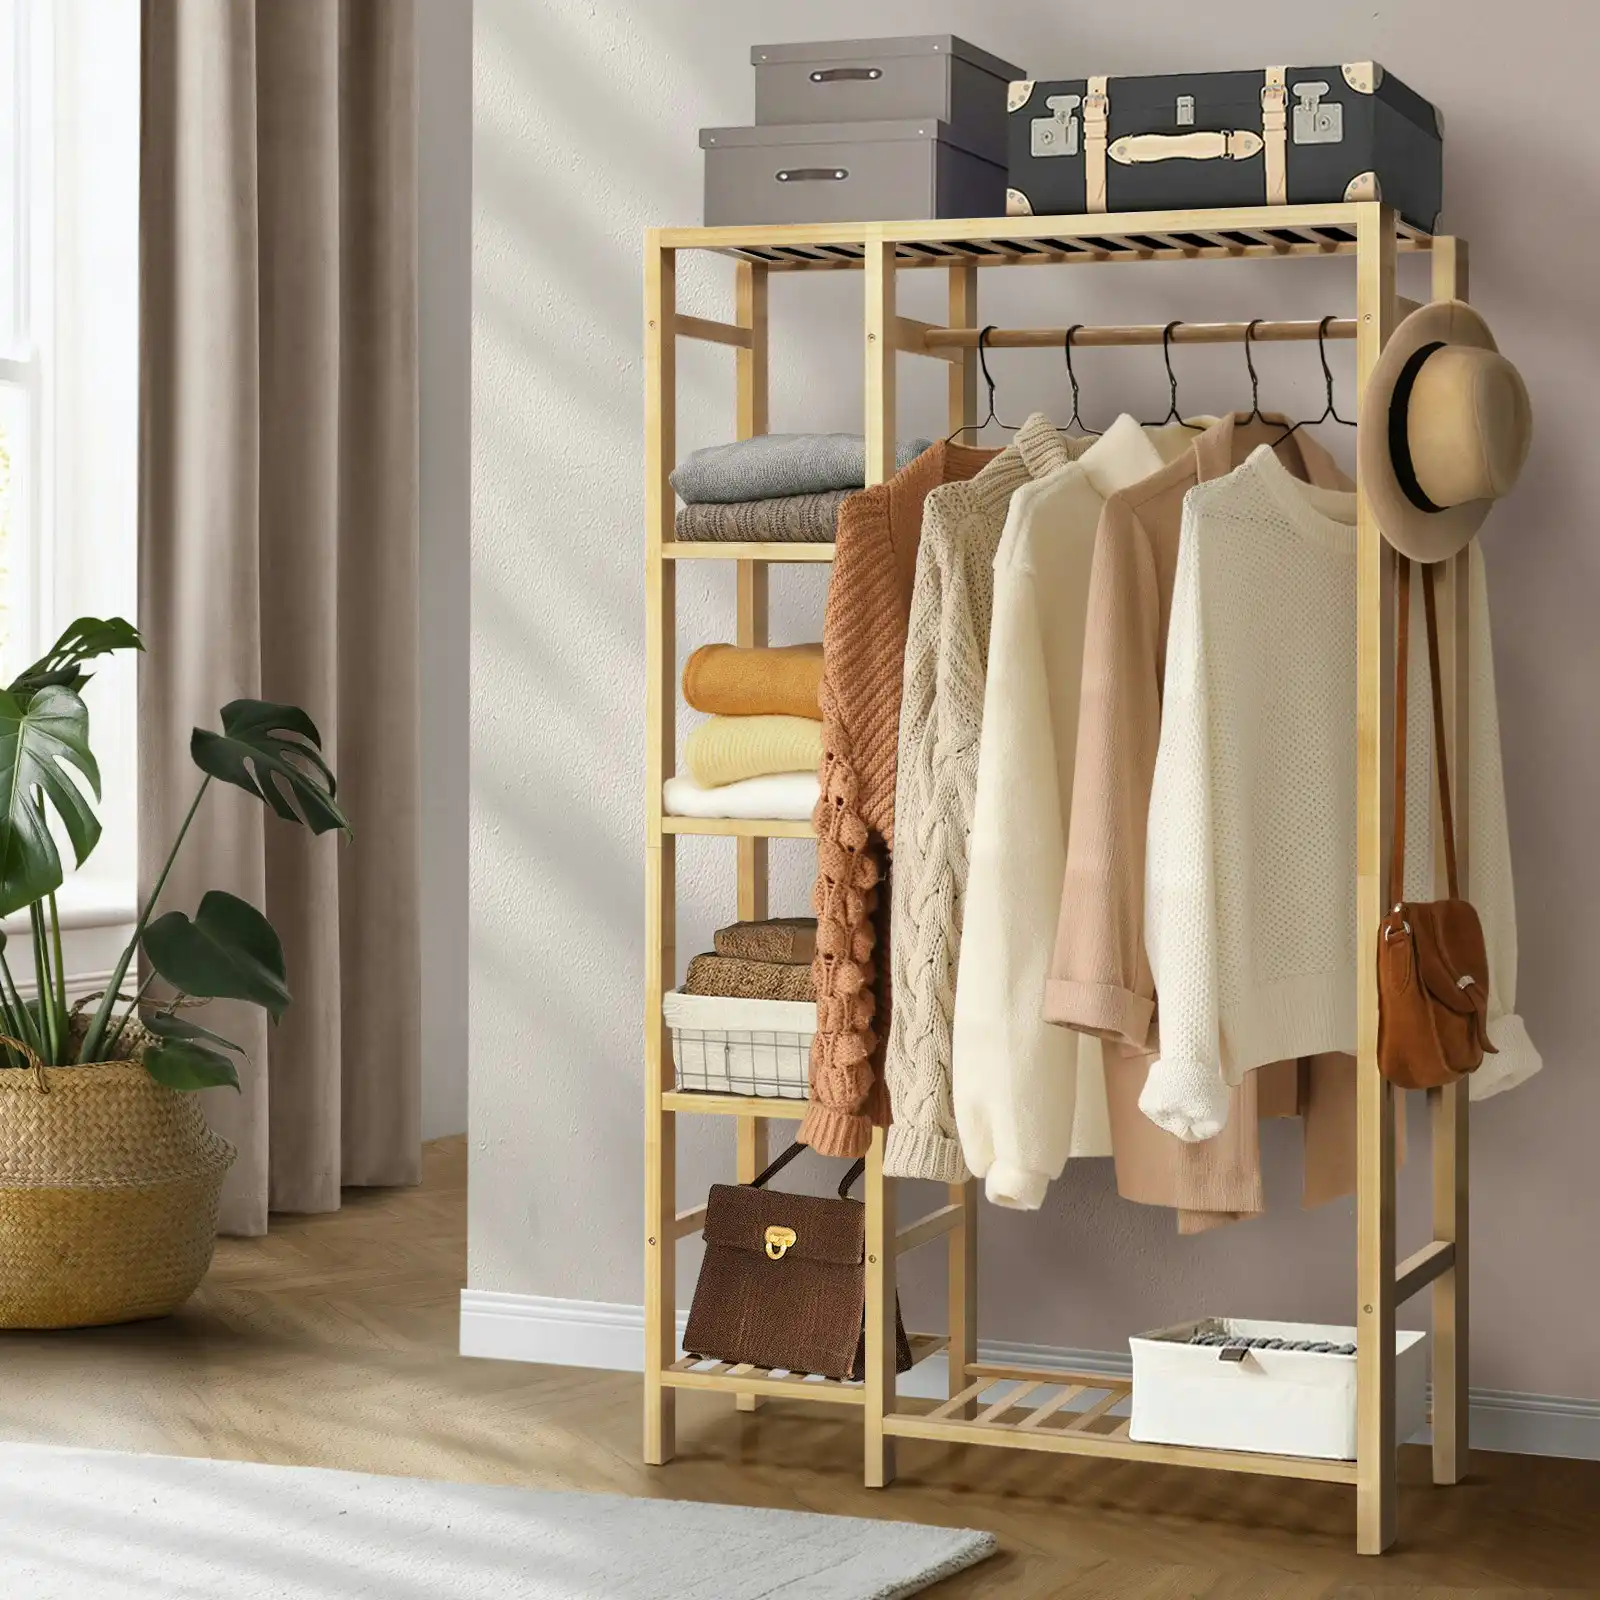 Oikiture Open Wardrobe Portable Rack Hanging Clothes Organizer Storage Shelves